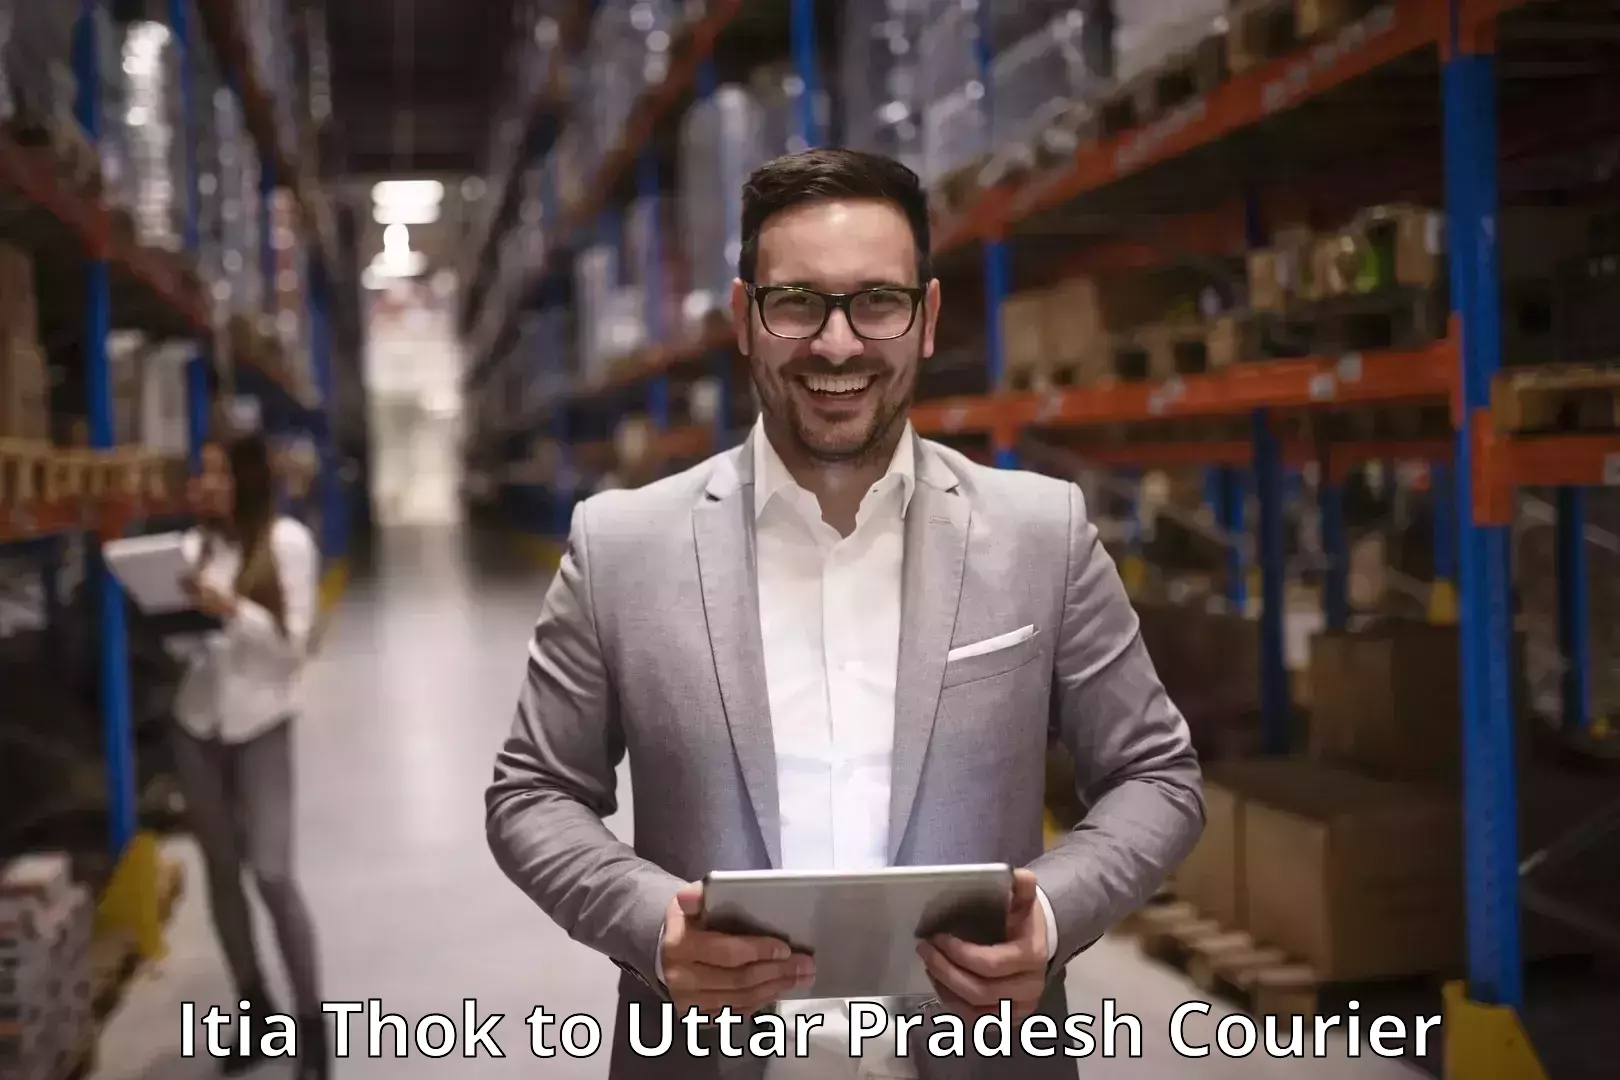 Efficient courier operations Itia Thok to Uttar Pradesh